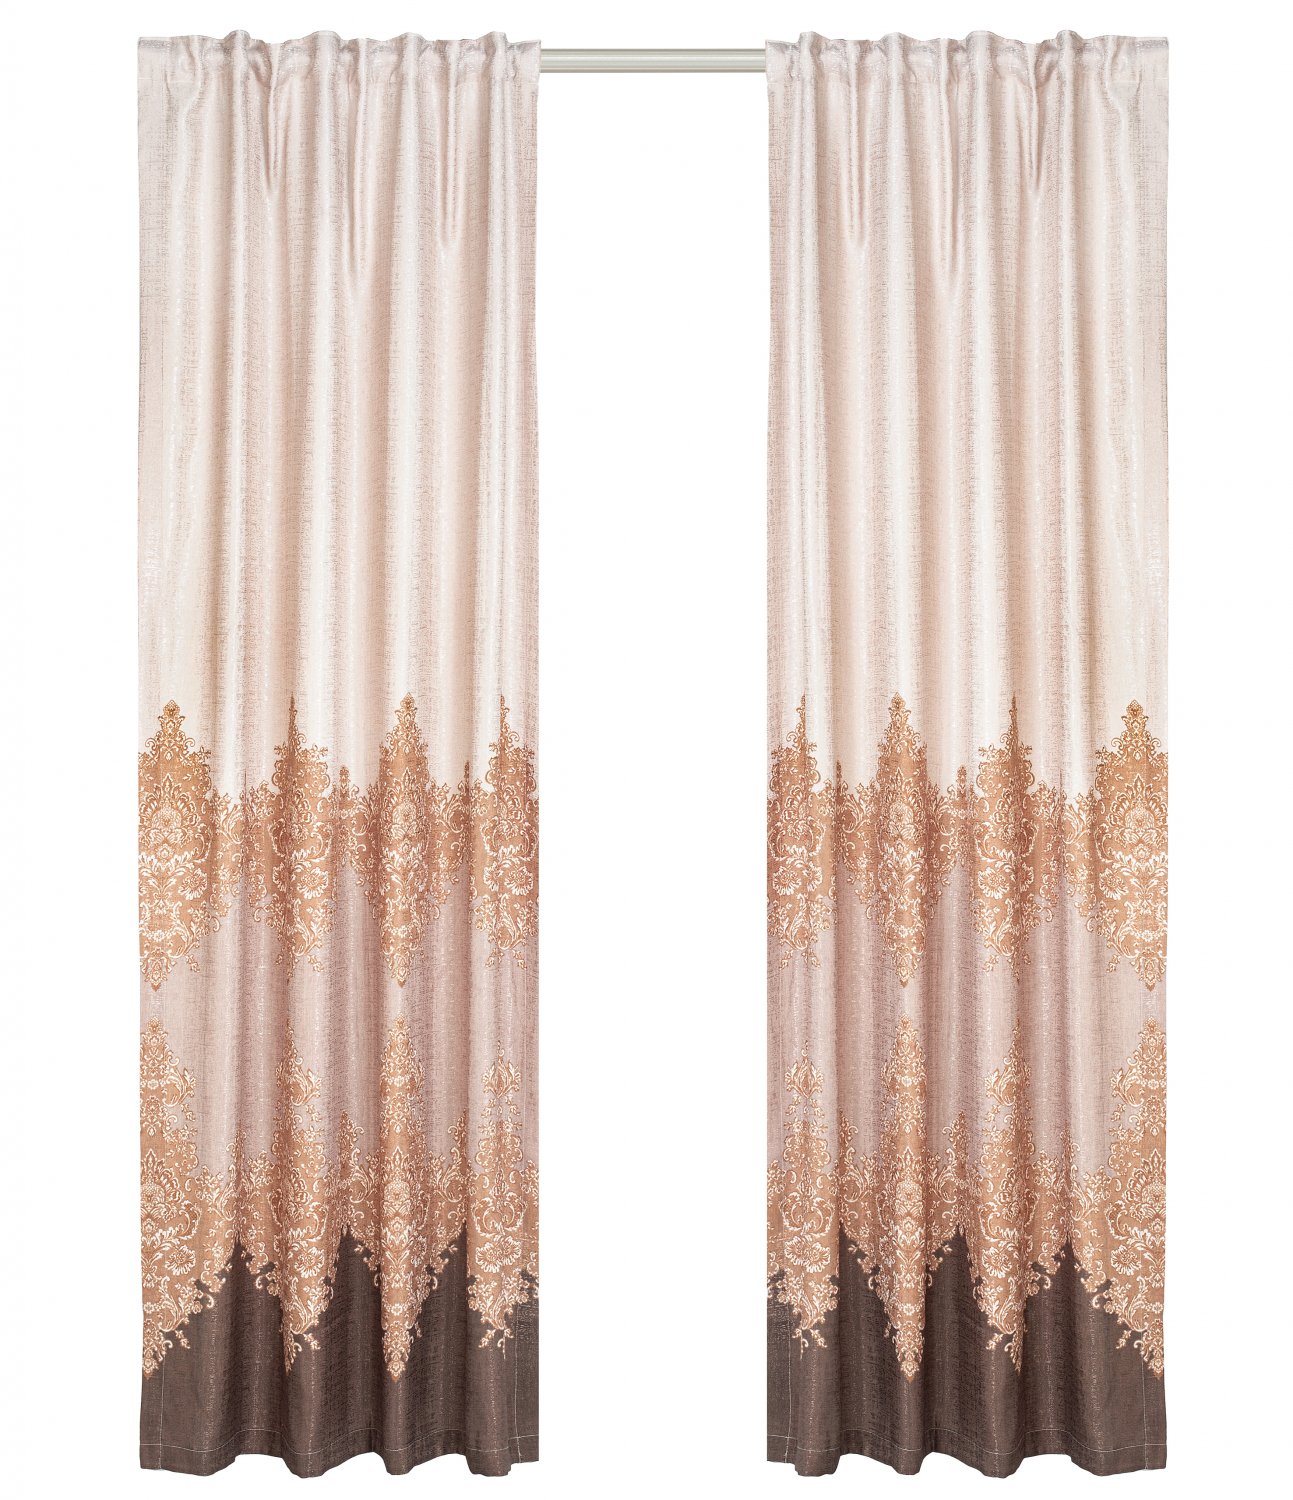 Vorhang - Shiloh (braun/beige) | Fertiggardinen